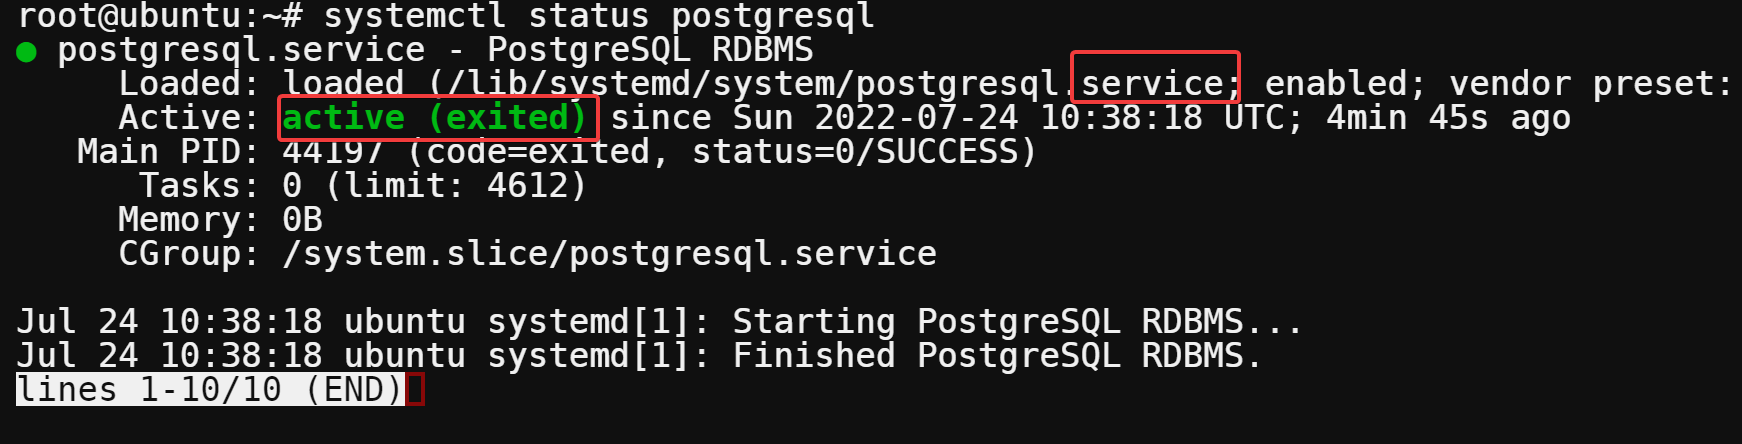 Verifying the PostgreSQL service is running